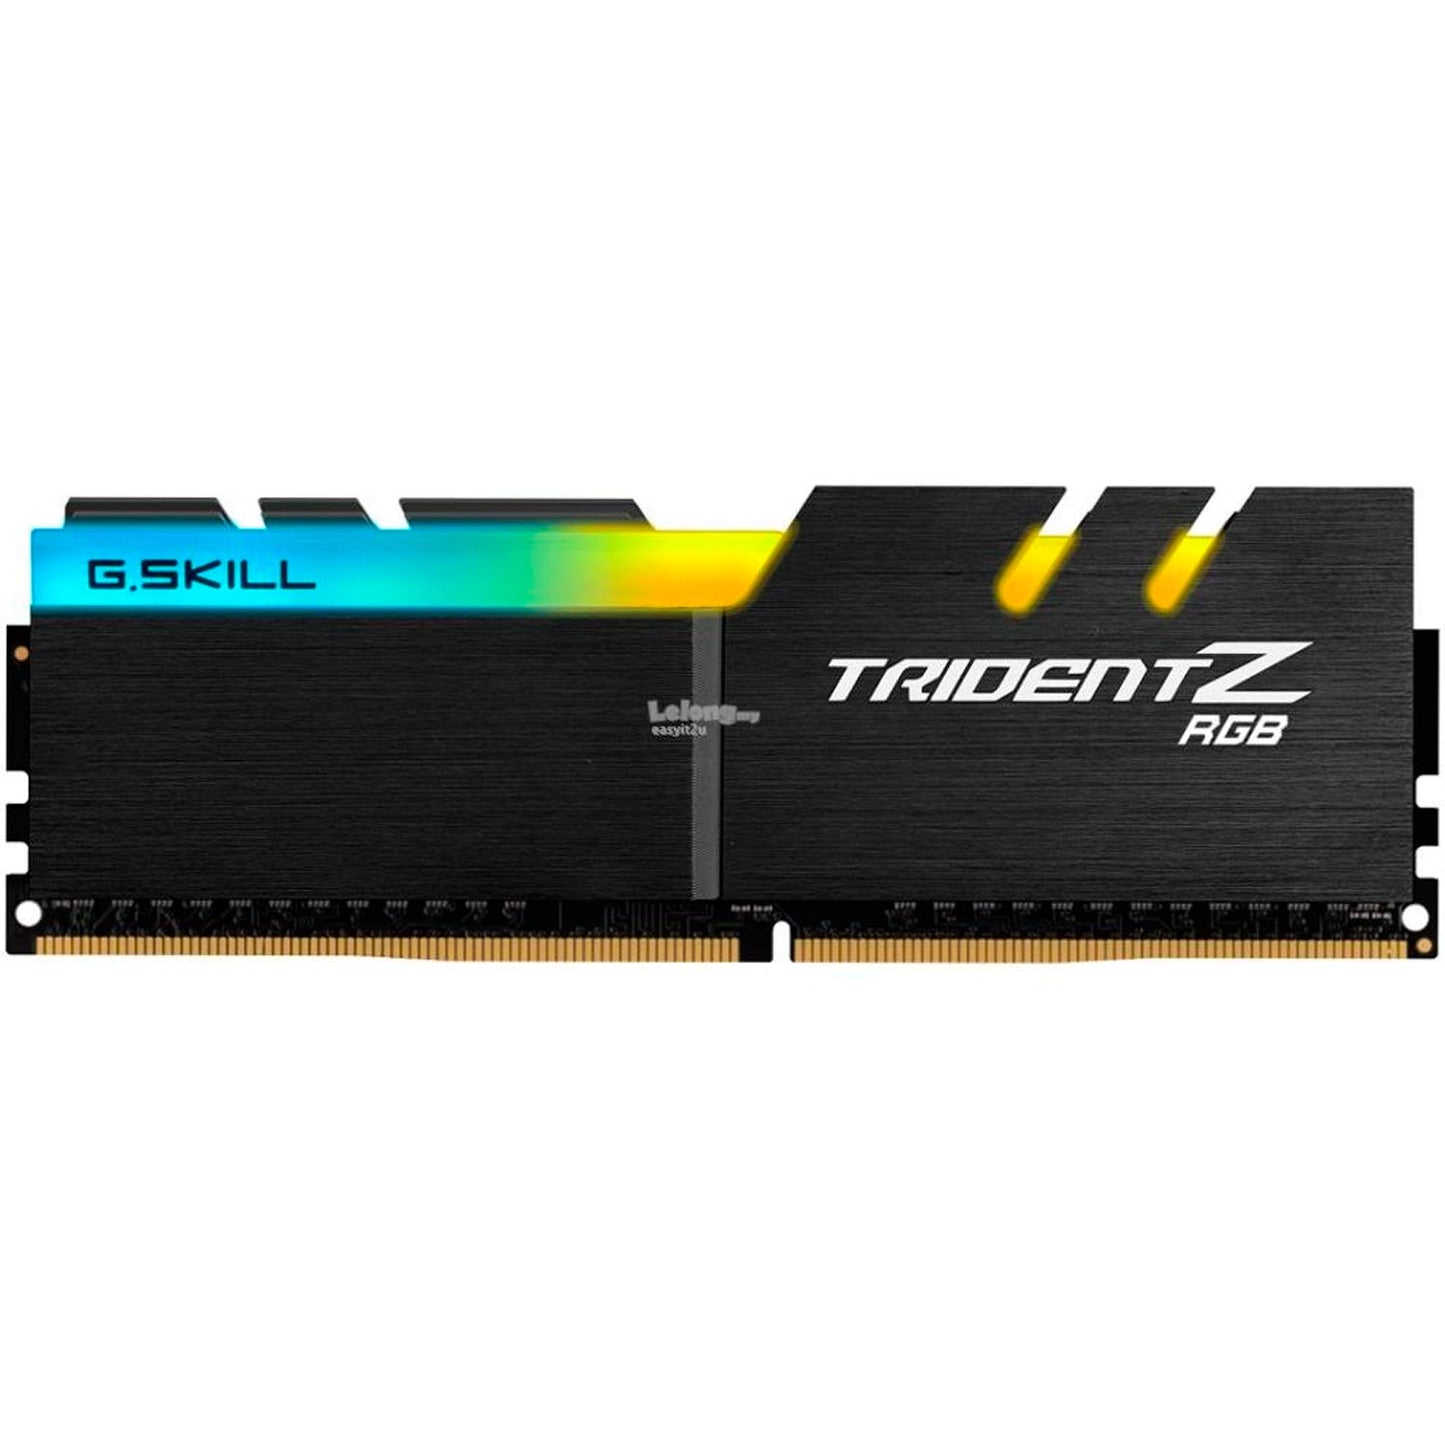 G.SKILL Trident Z 8GB RGB DDR4 RAM 3200MHz CL16 Desktop Gaming Memory